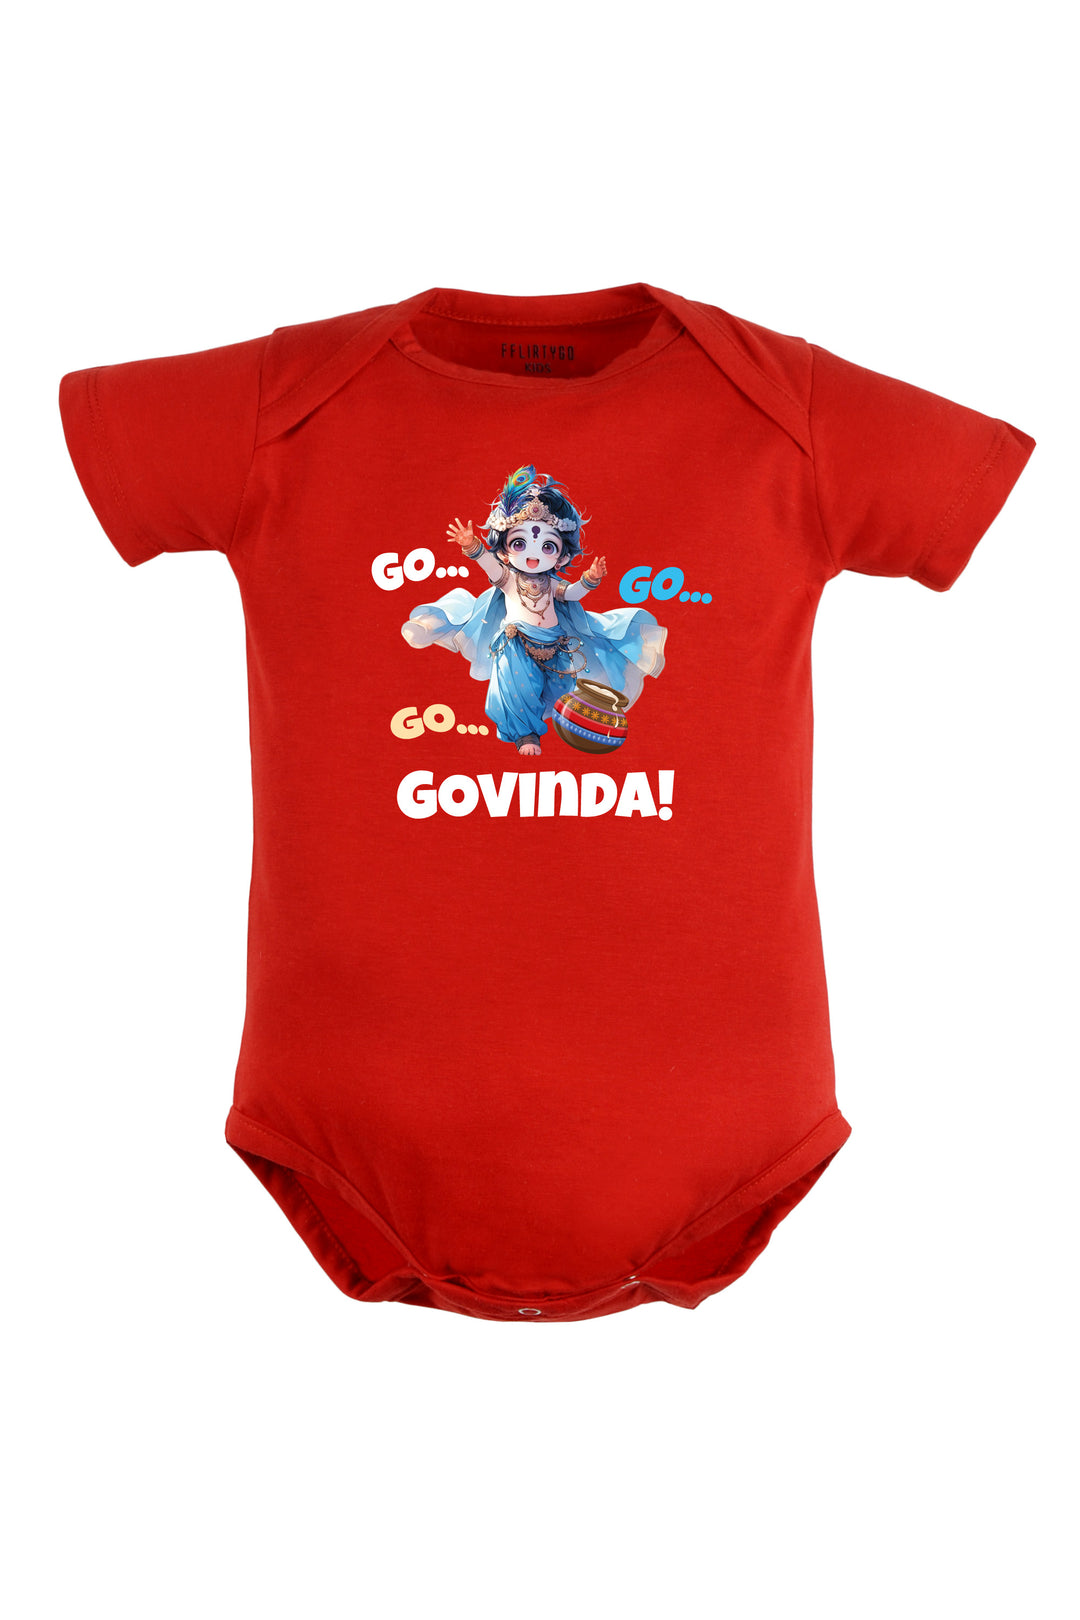 Go Go Go Govinda Baby Romper | Onesies